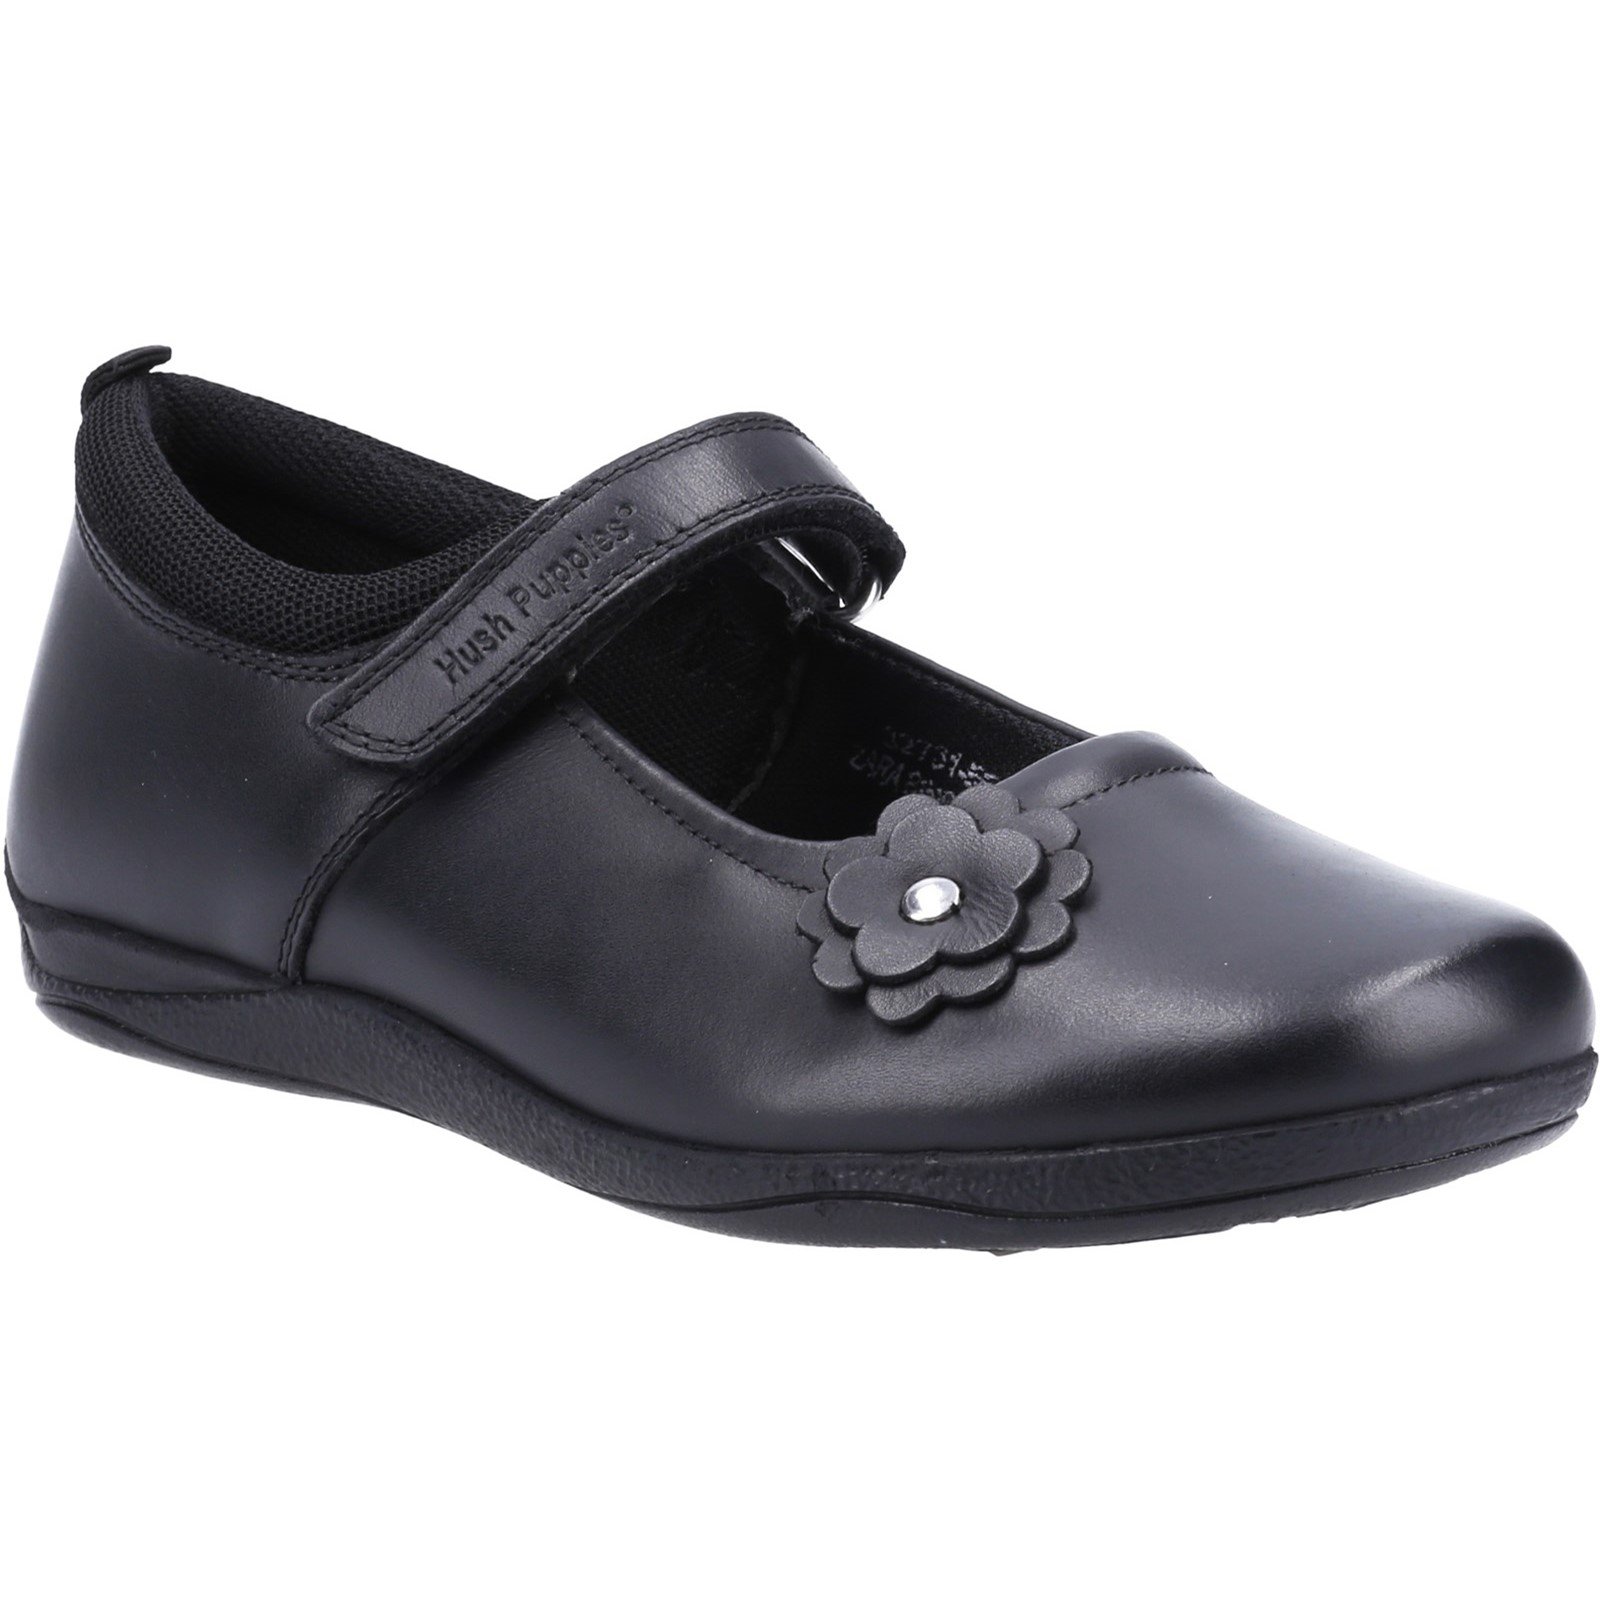 Hush Puppies Kid's Zara Junior School Flat Shoe Black 32731 - Black 2